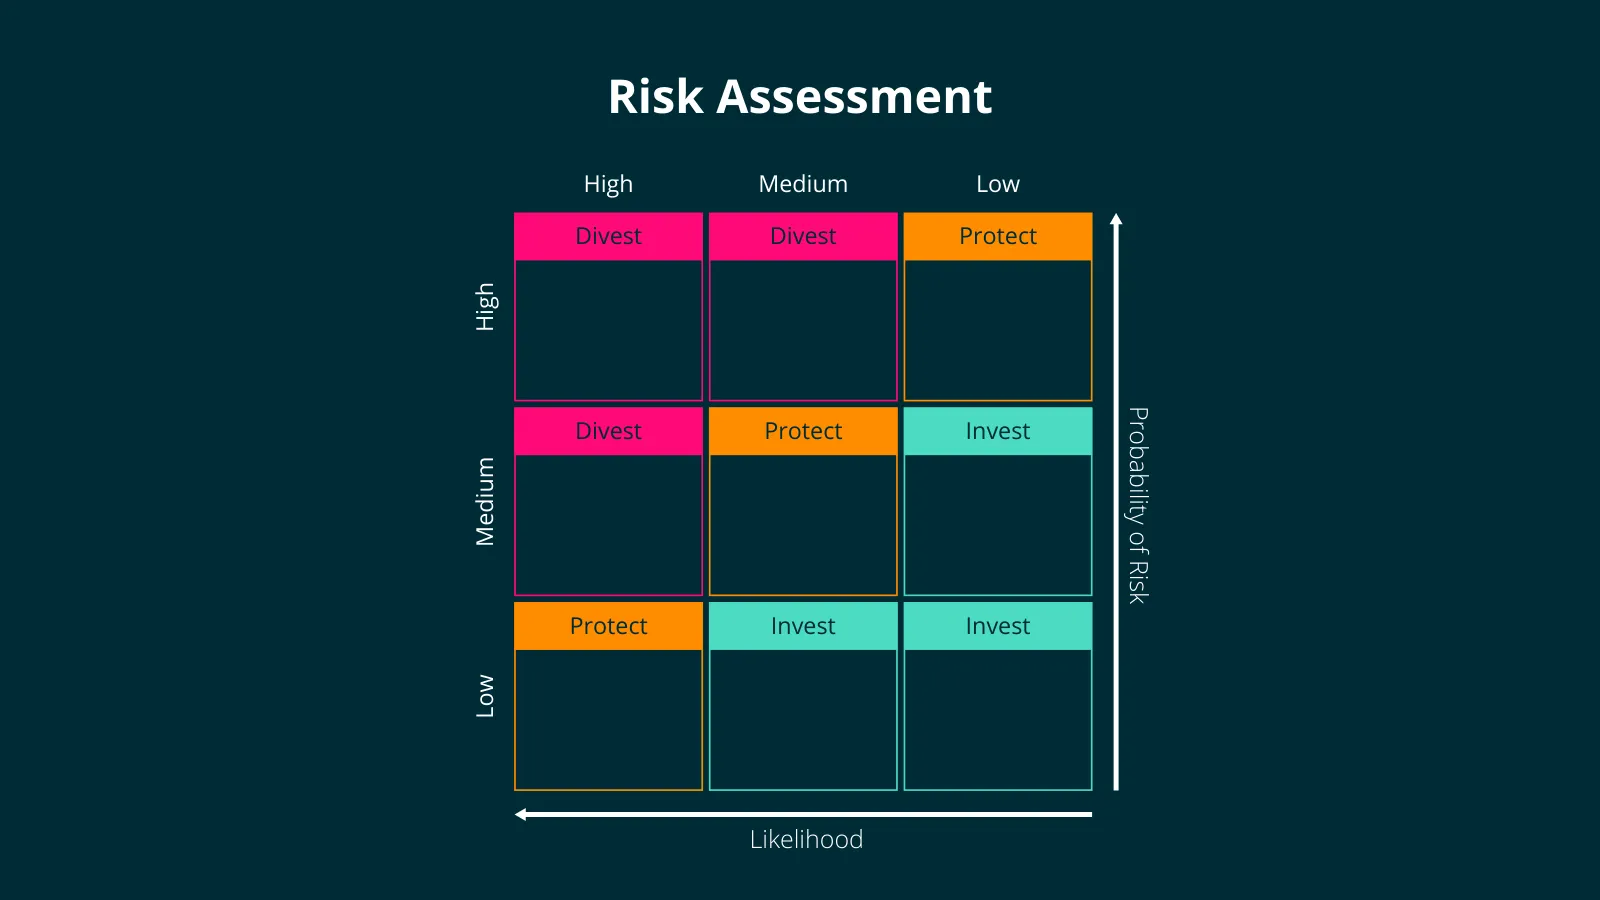 GE-McKinsey Matrix example: Risk Assessment